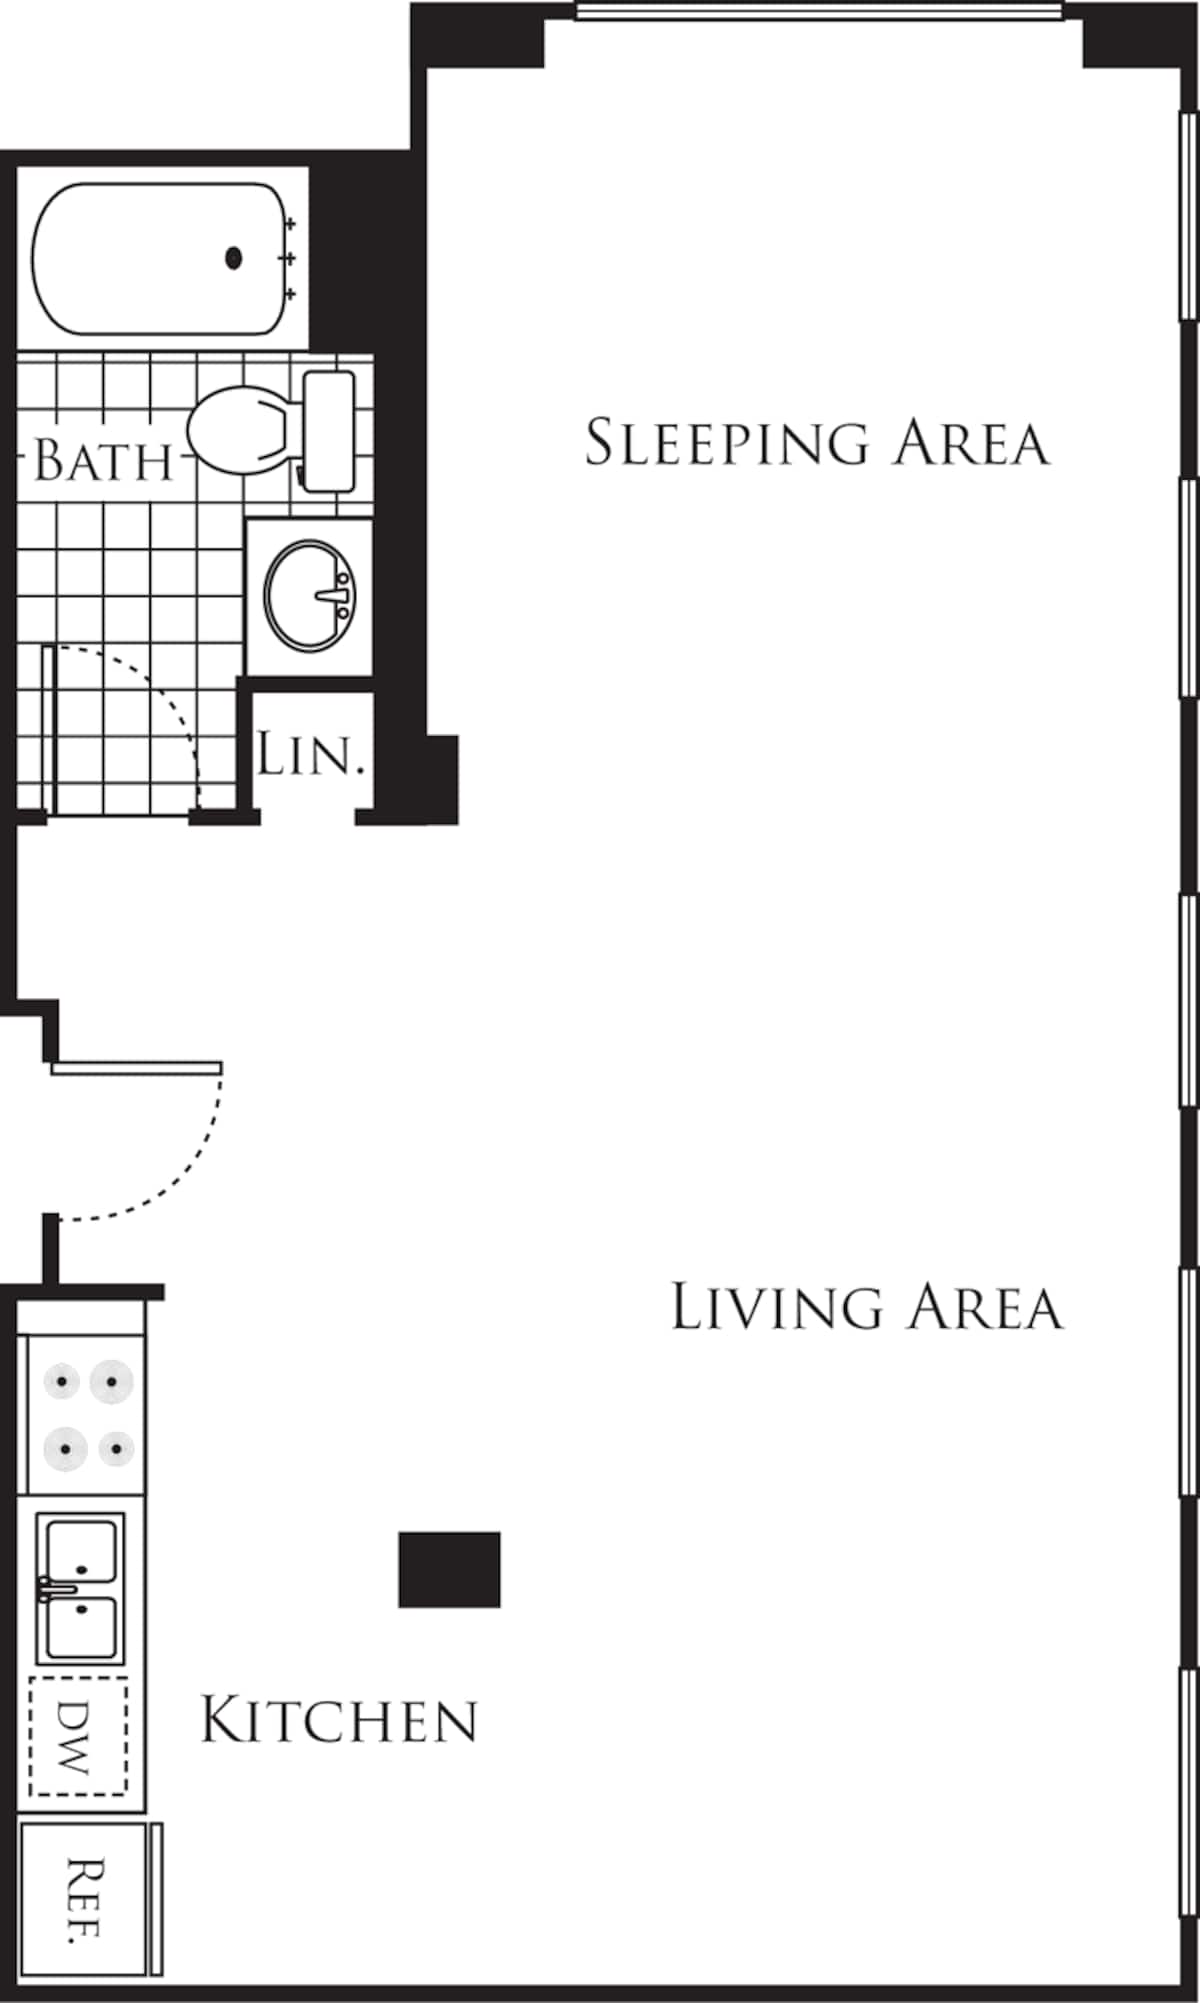 Floorplan diagram for Studio C5, showing Studio